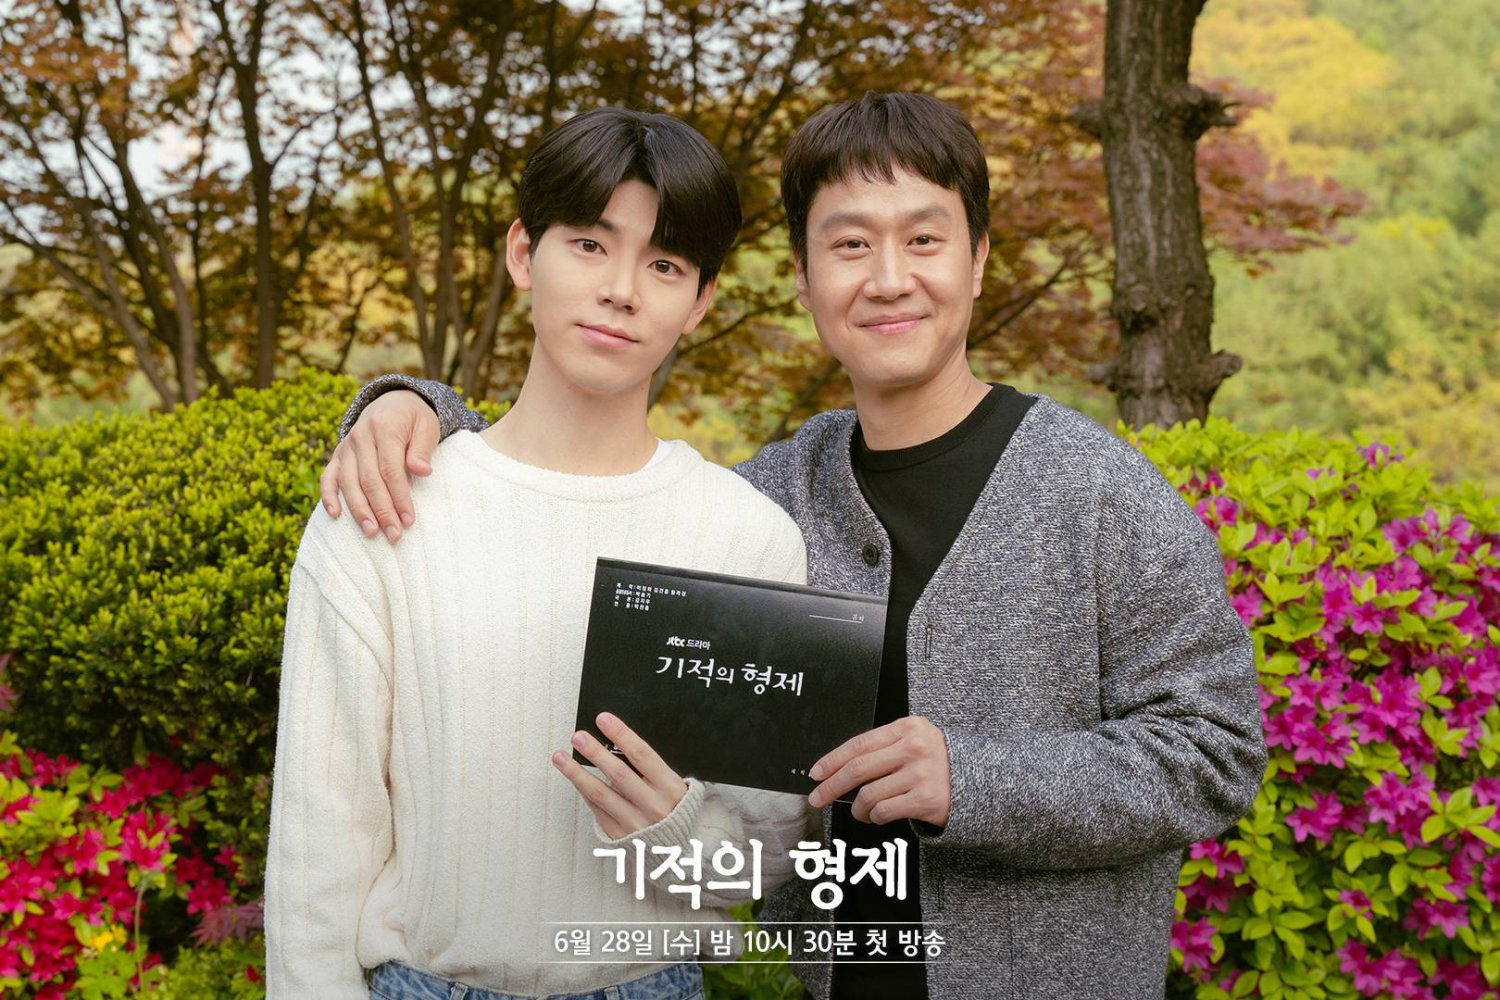 Jung Woo and Bae Hyun-sung become JTBC's Miracle Brothers